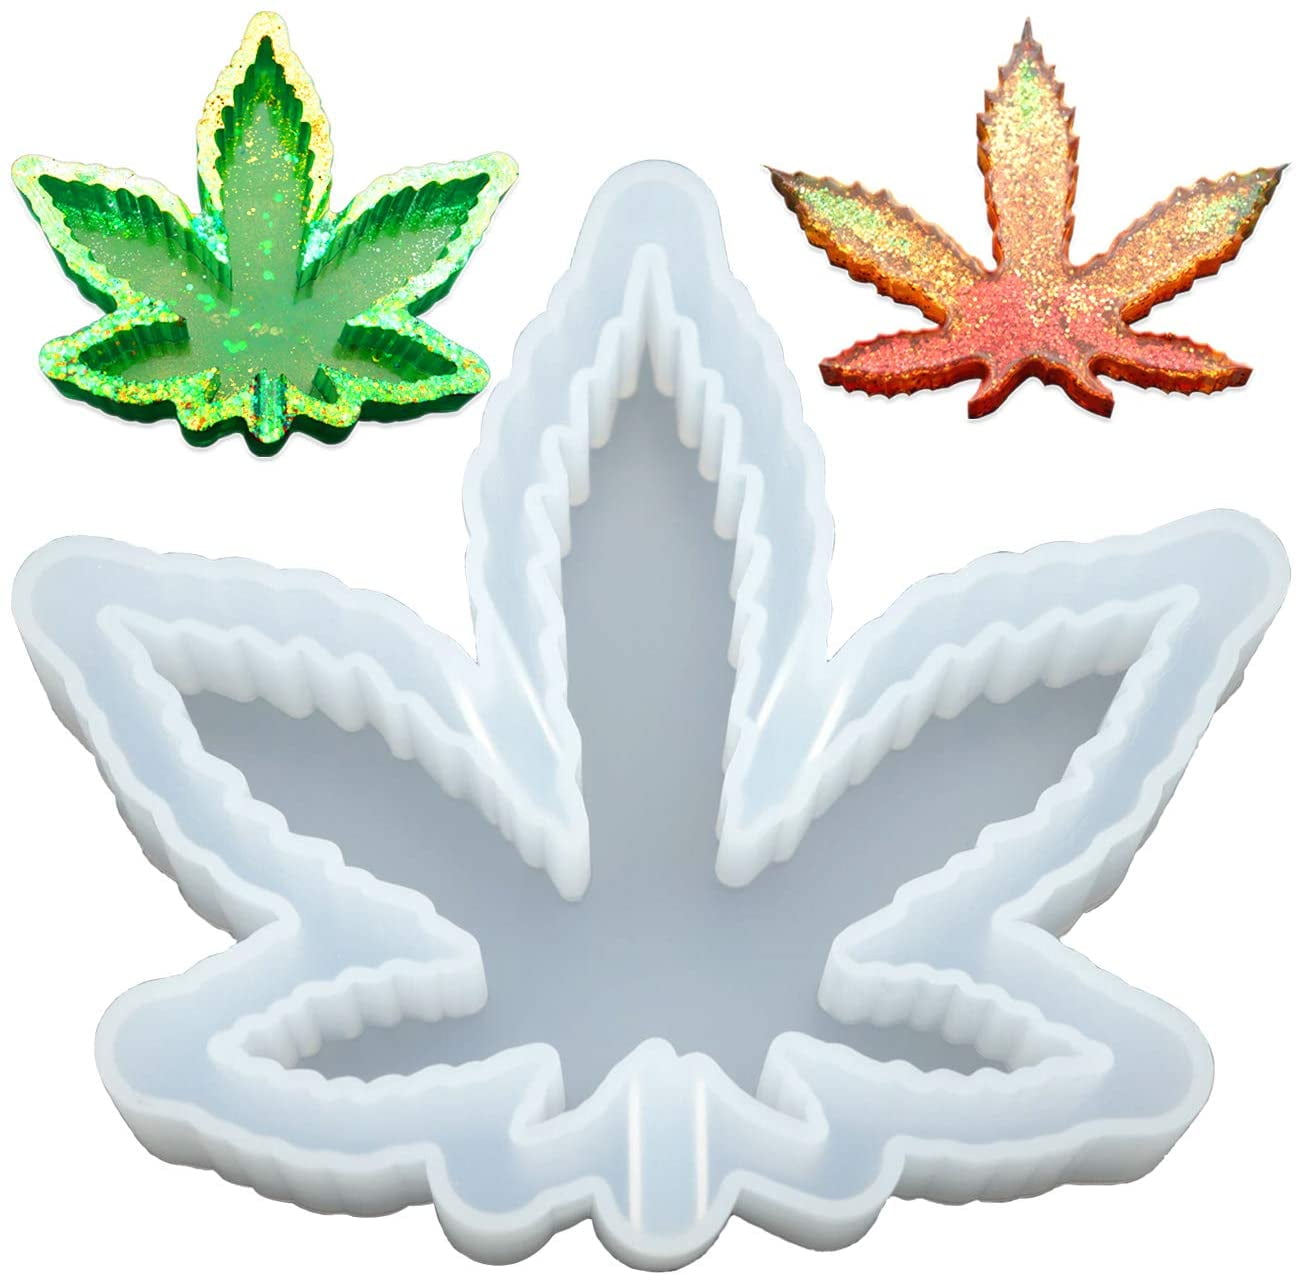 2 to 4 Inch Cannabis Leaf Cookie Cutter Pot Weed Marijuana 420 Fondant cutter 